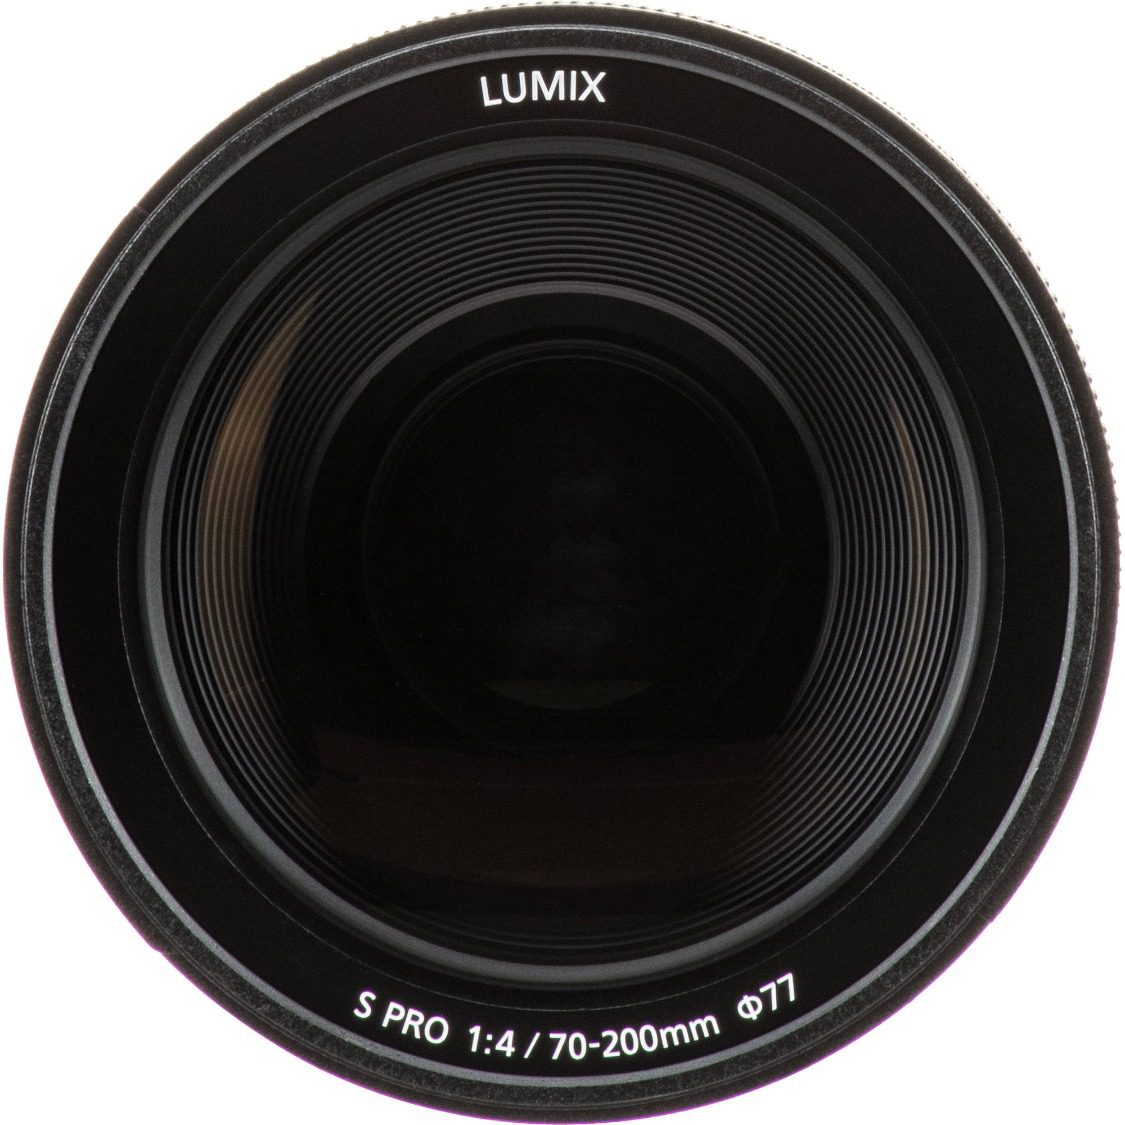 Panasonic Lumix S Pro 70-200mm f/4 O.I.S.